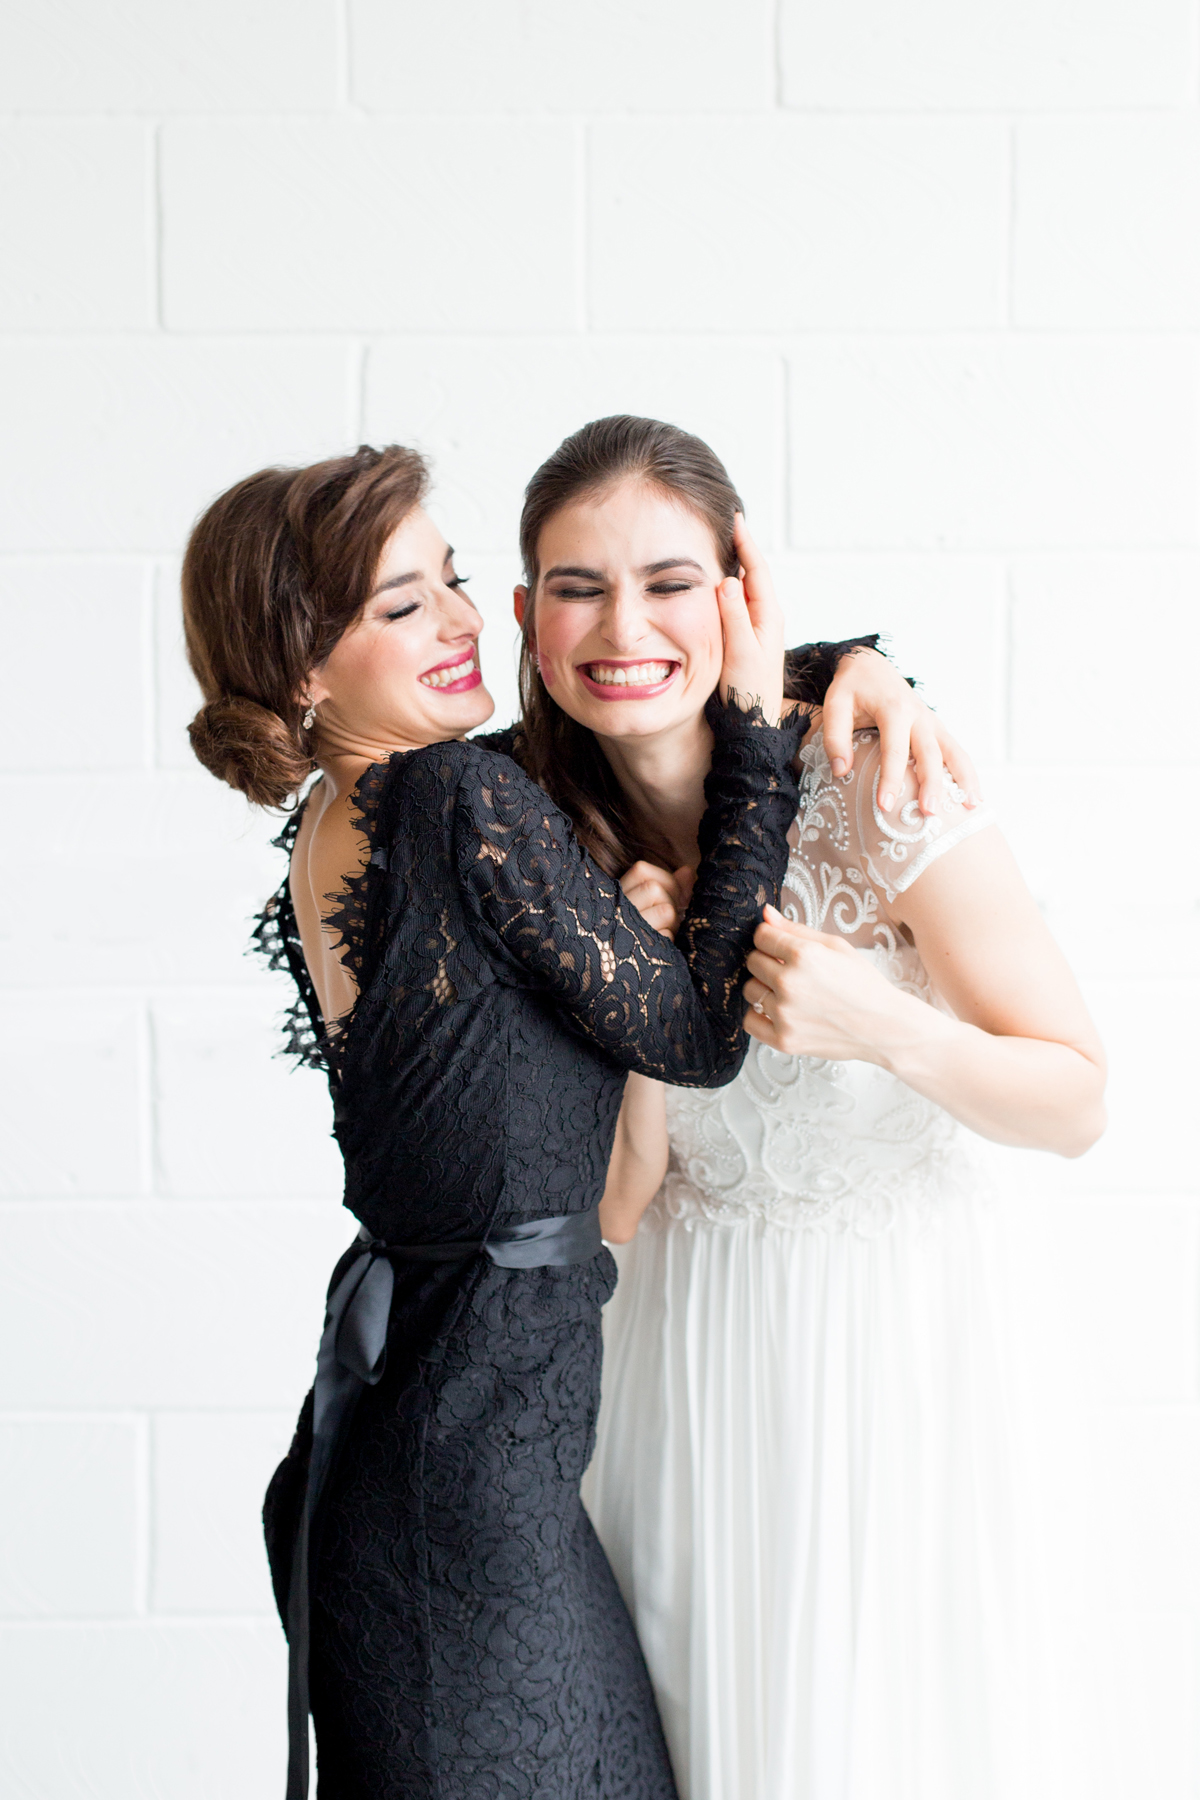 Black Lace Bridesmaid Dress - Industrial Warehouse Wedding -- The Overwhelmed Bride - Wedding Blog 